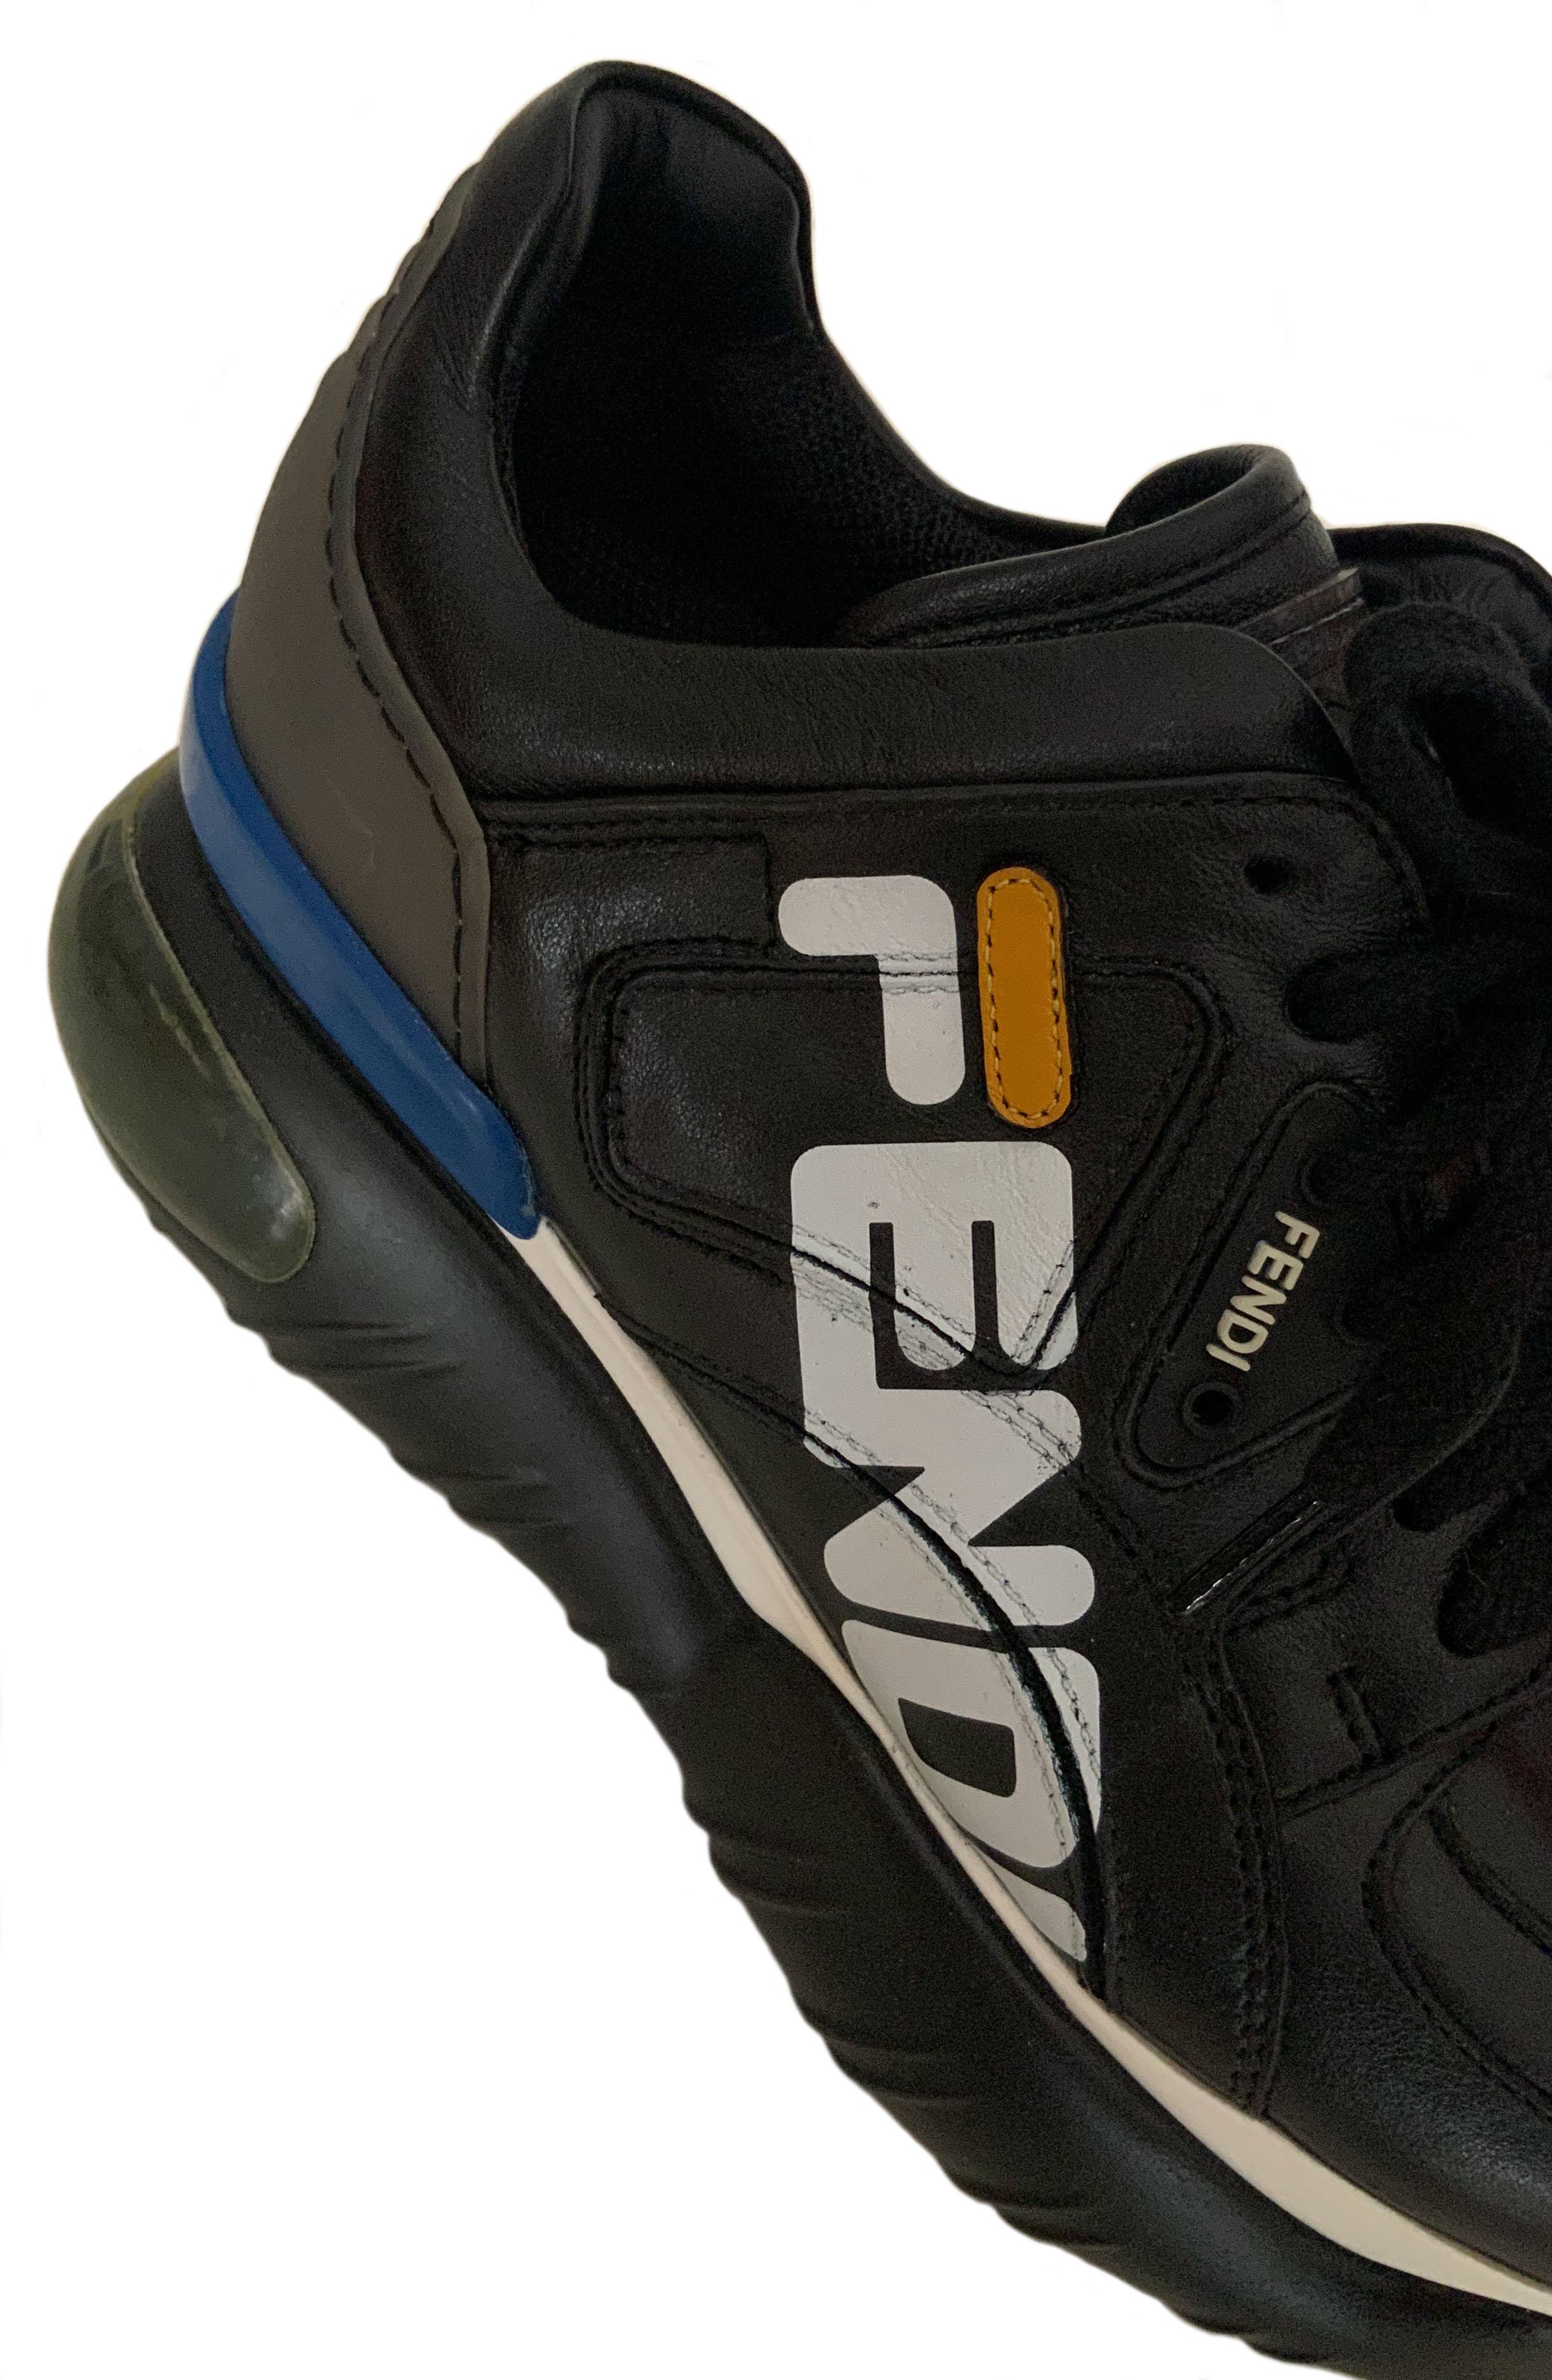 Women's or Men's Fendi x Fila Black Leather Fila Mania Platform Sneakers